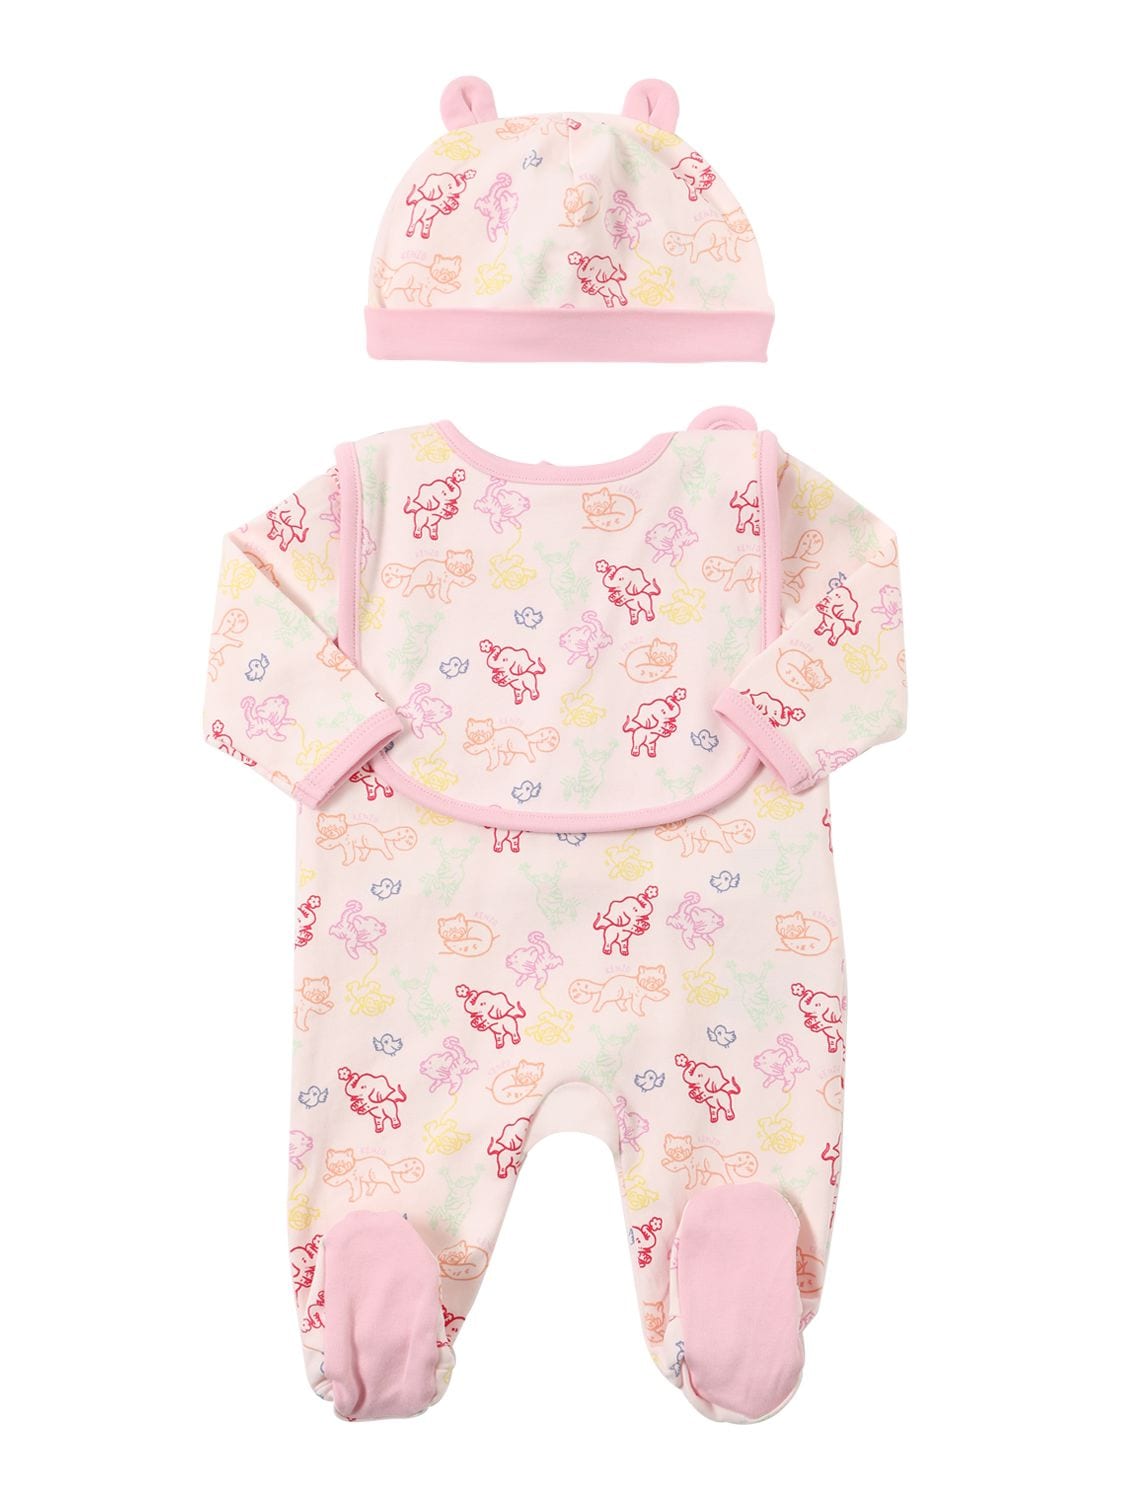 Kenzo Babies' Organic Cotton Romper, Bib & Hat In Pink